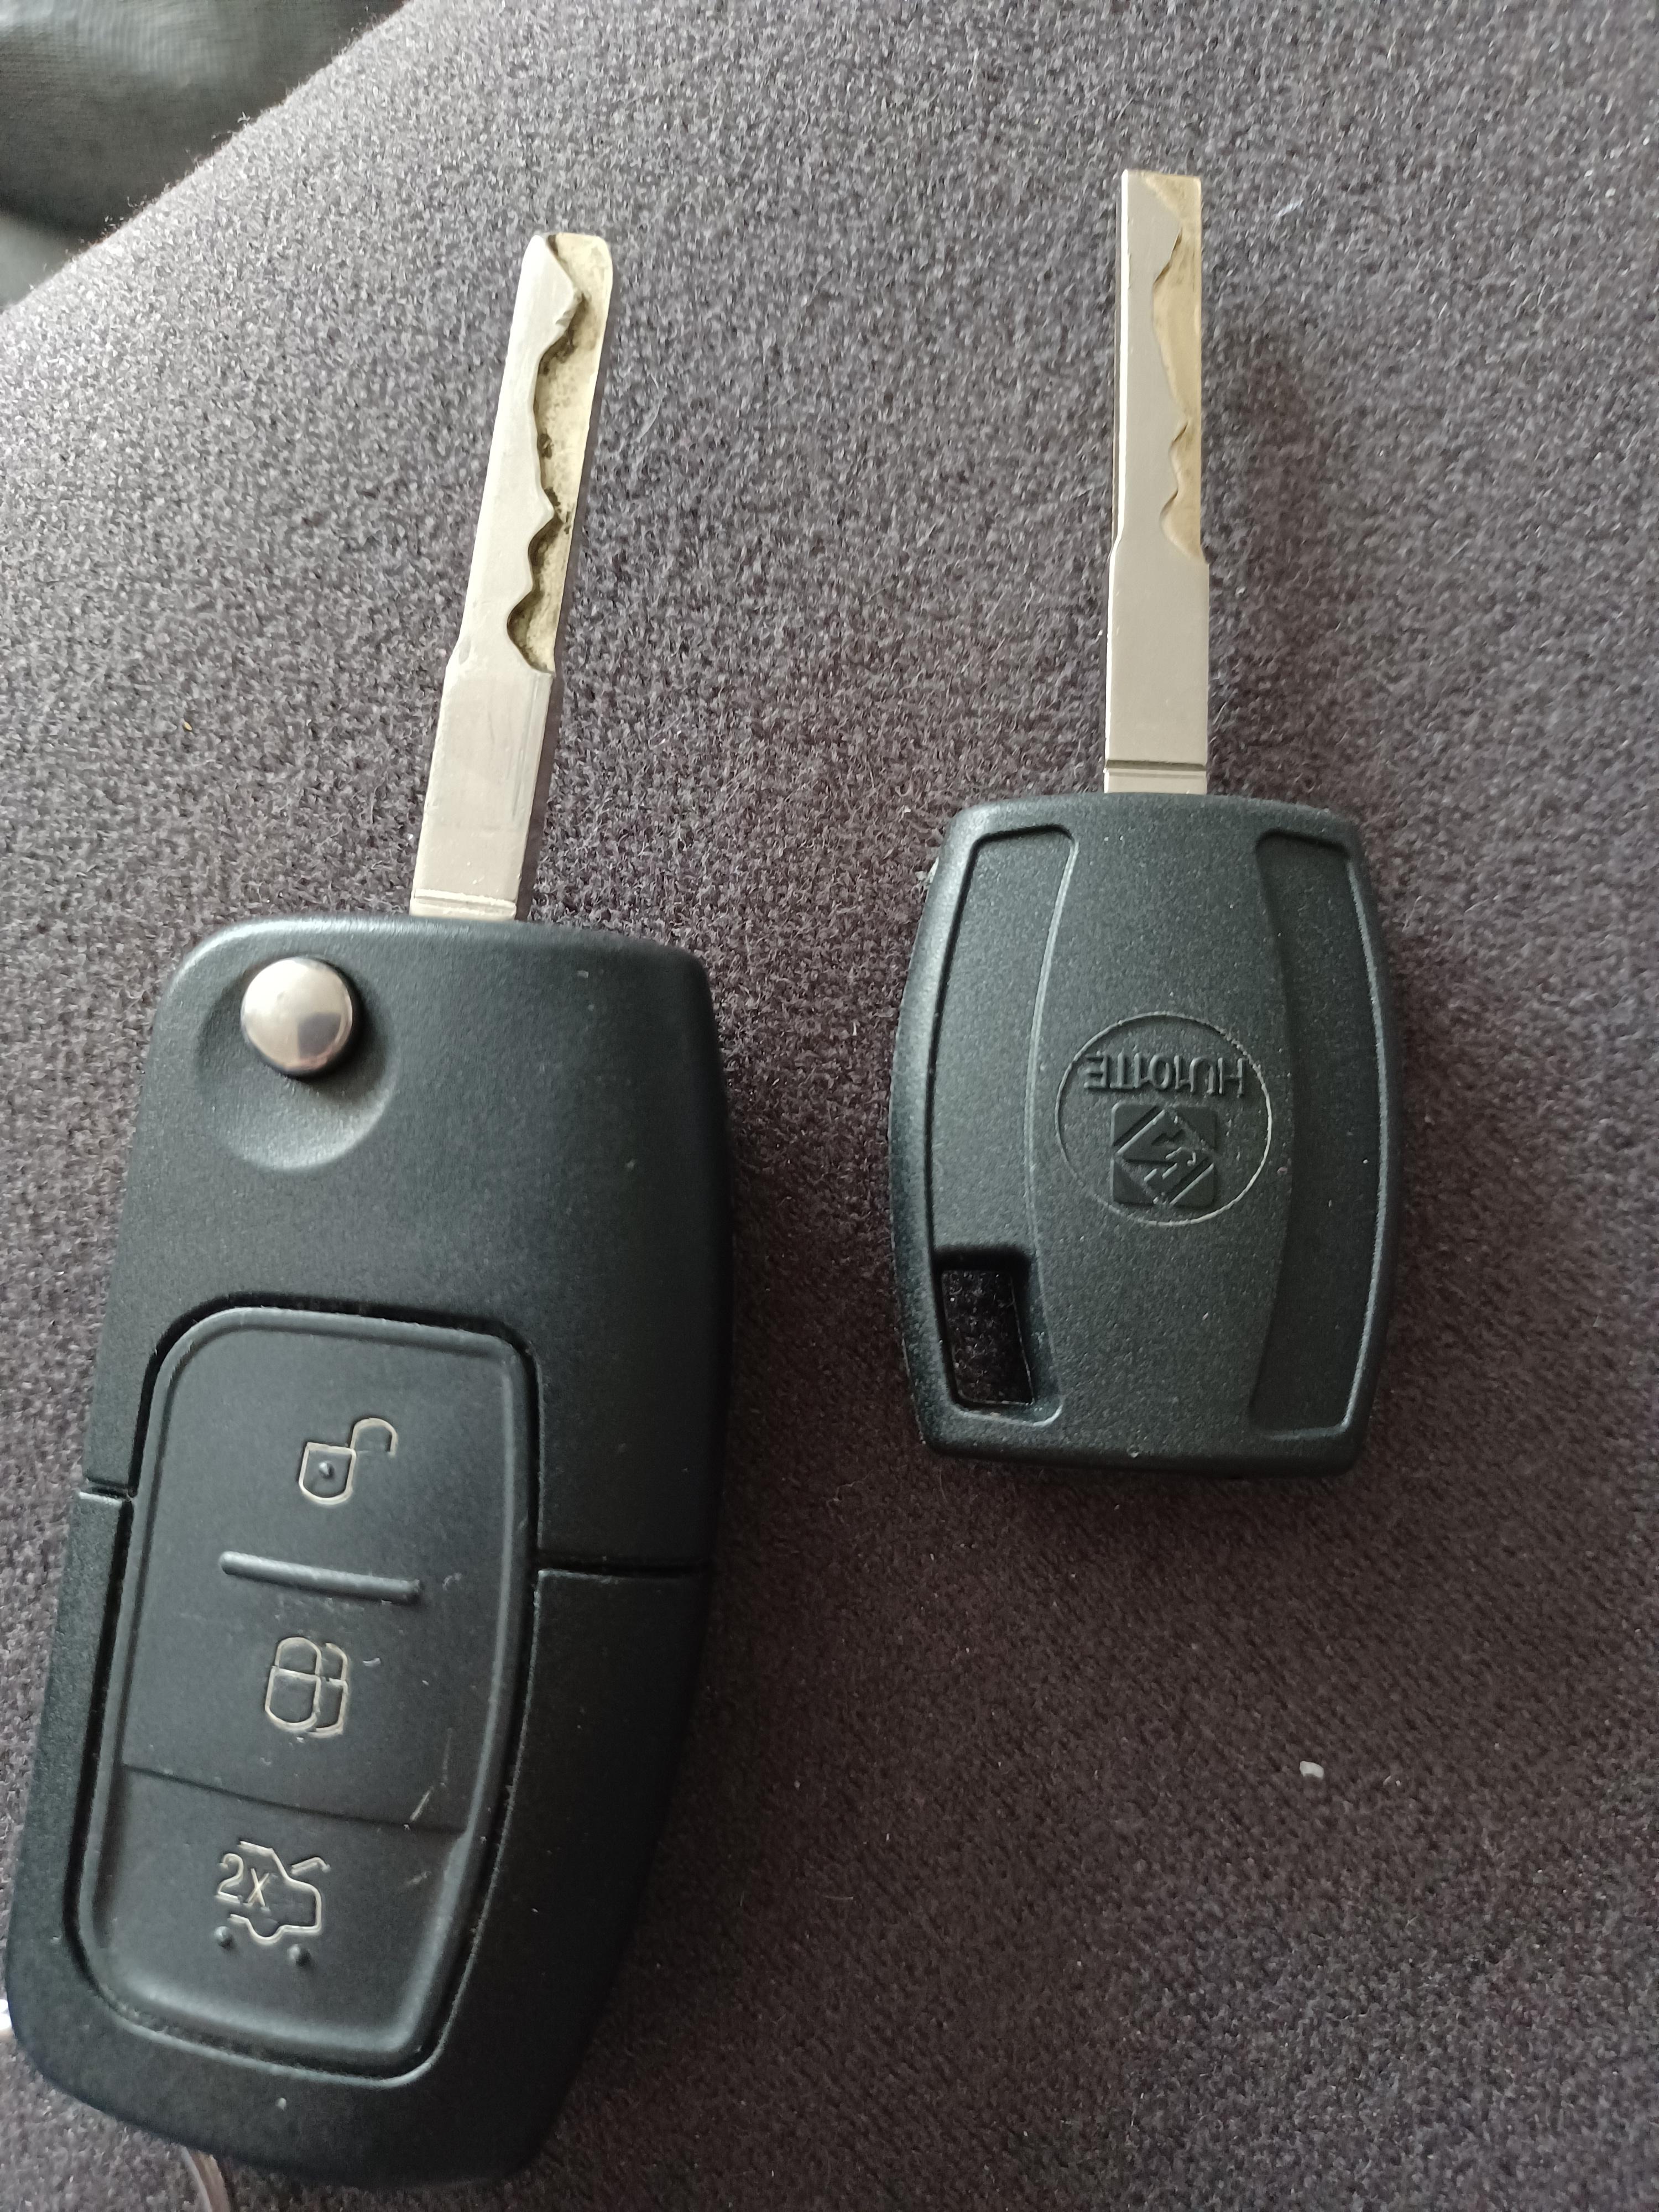 New manual key doesn't work - Ford Fiesta Club - Ford Owners Club ...